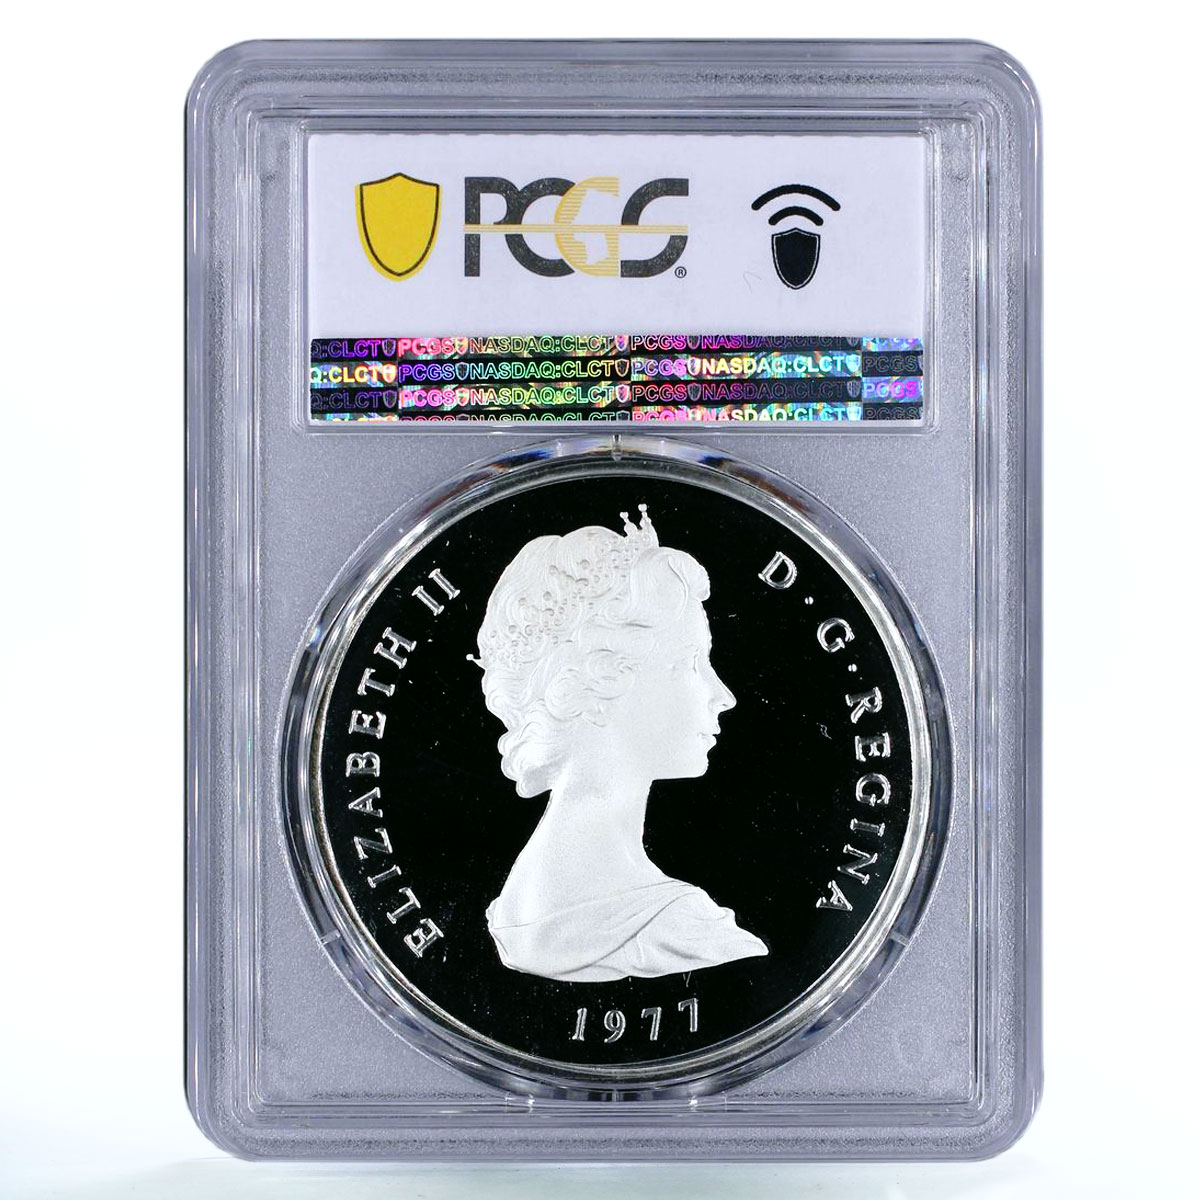 Turks and Caicos Islands 20 crowns Queen Victoria PR69 PCGS silver coin 1977